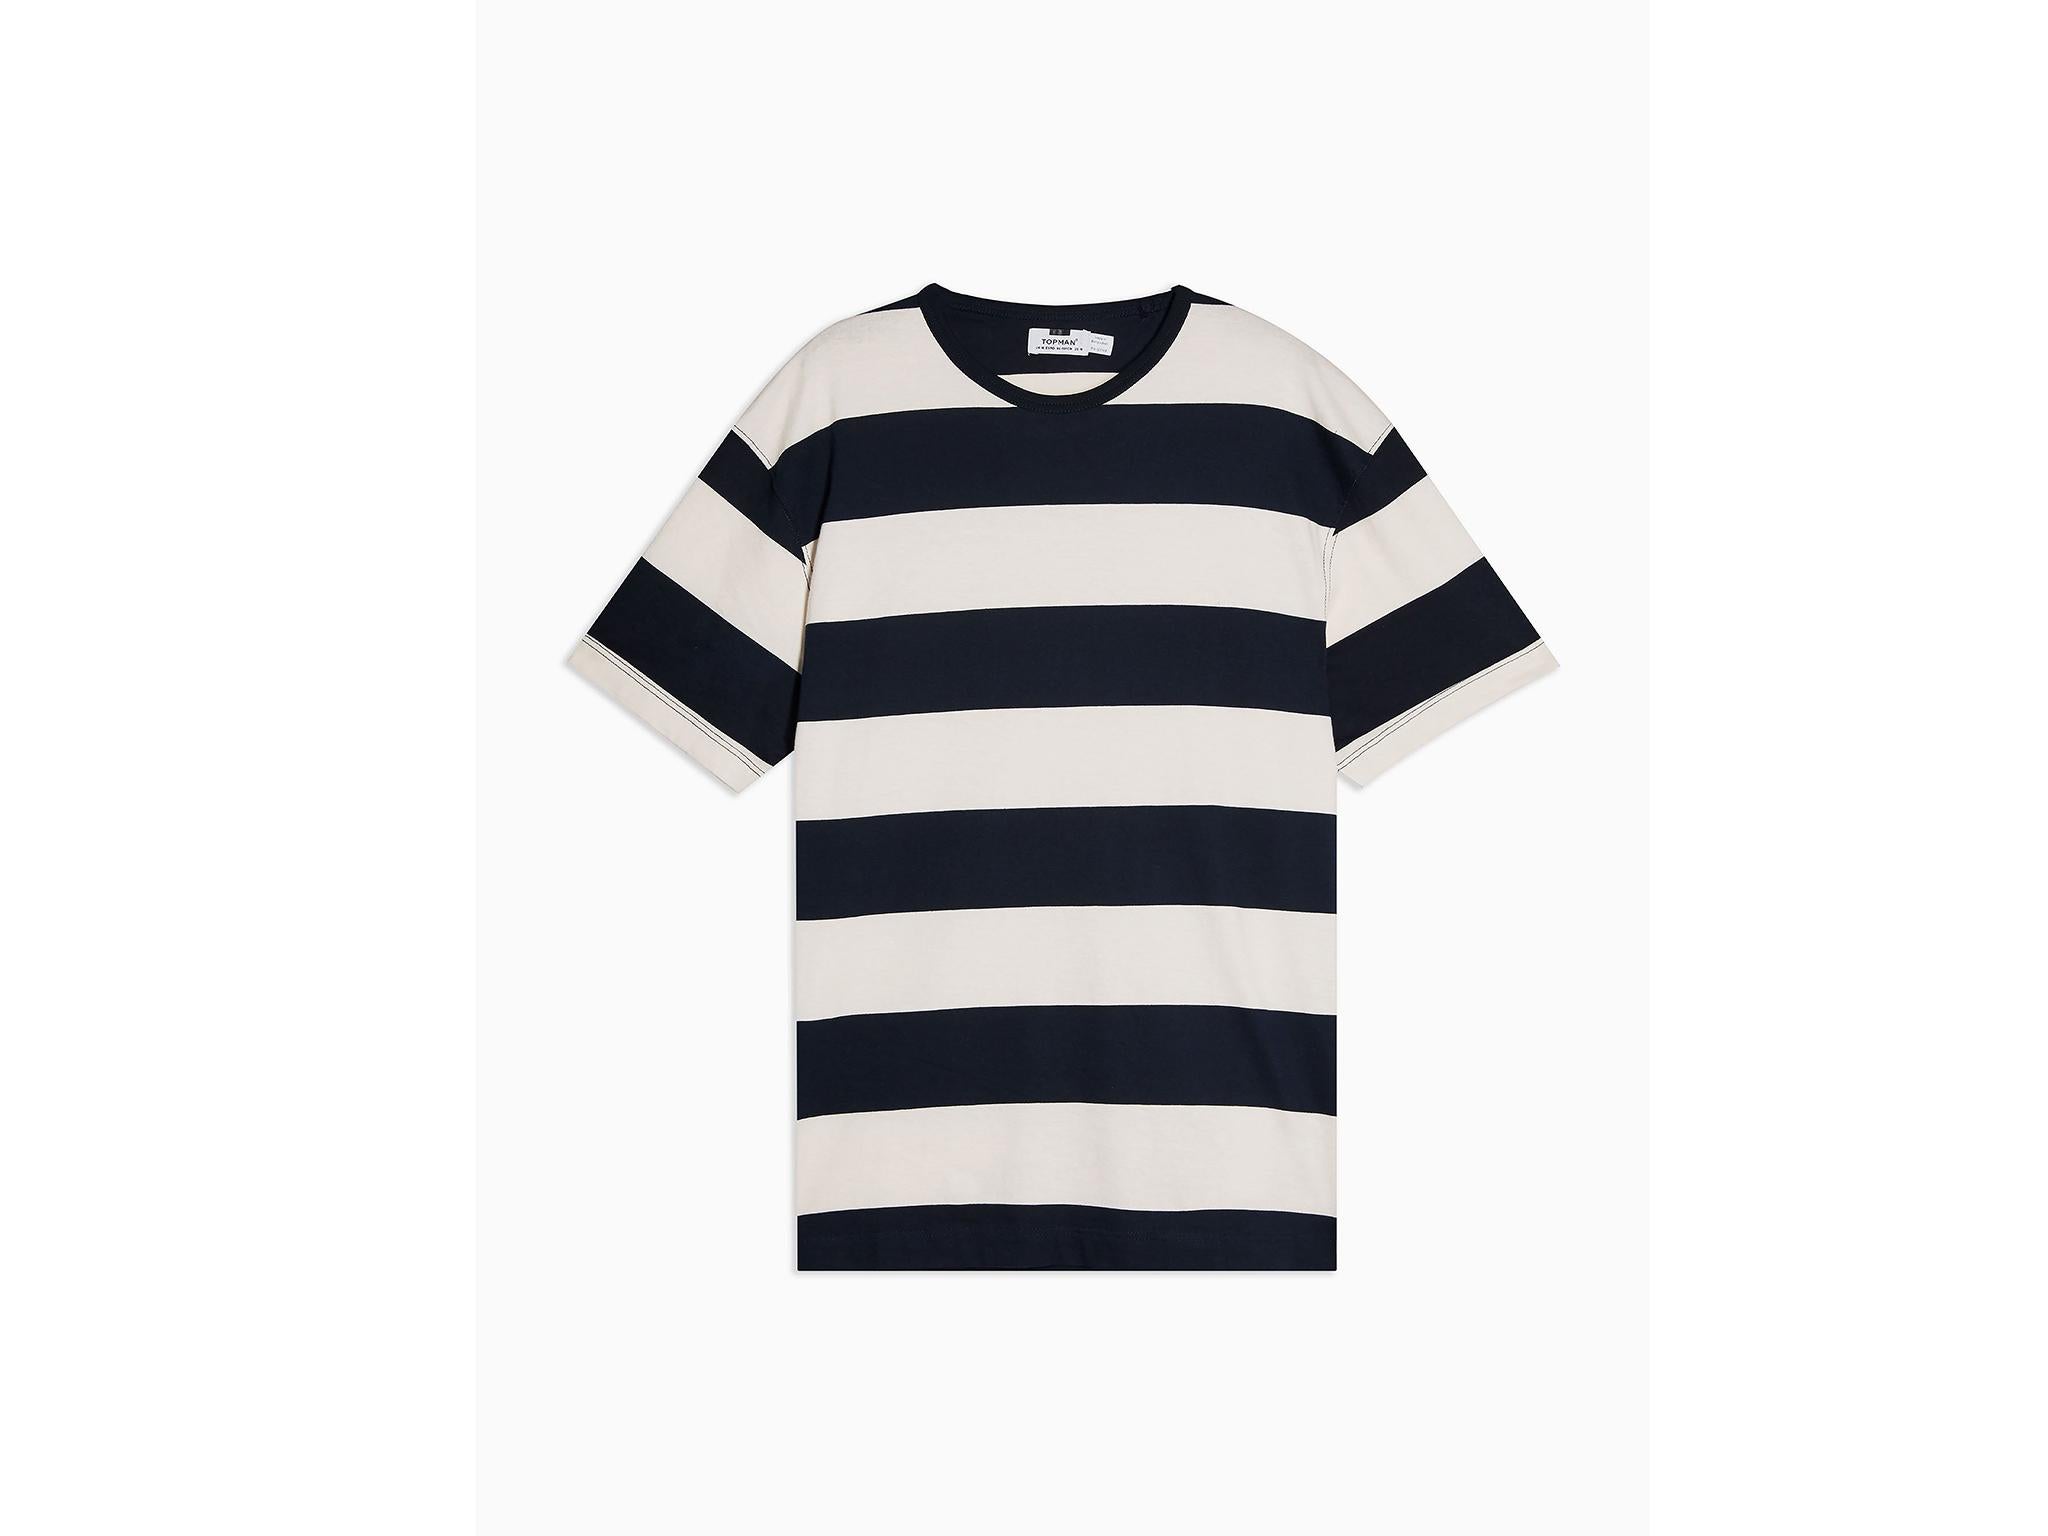 Zipong Mens T-Shirt Cotton Short Sleeve Tee Shirt 2019 Streetwear Style Things T Shirt Male